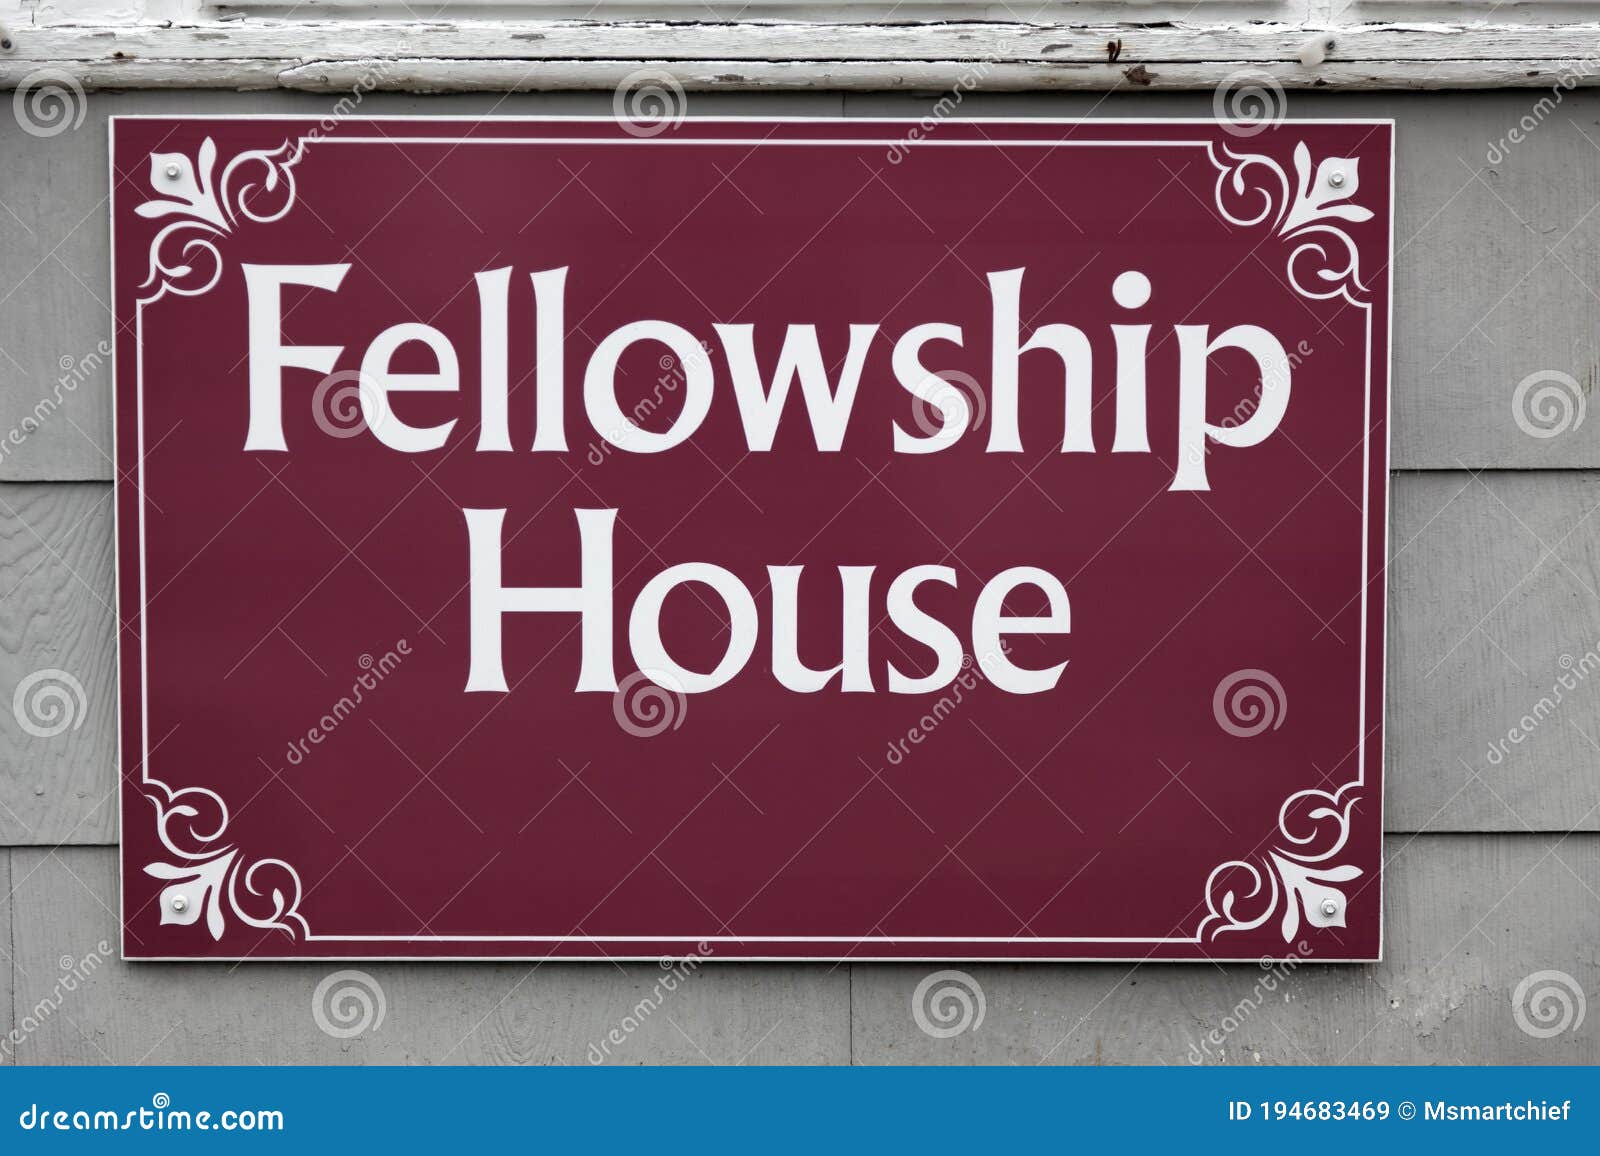 fellowship house sign